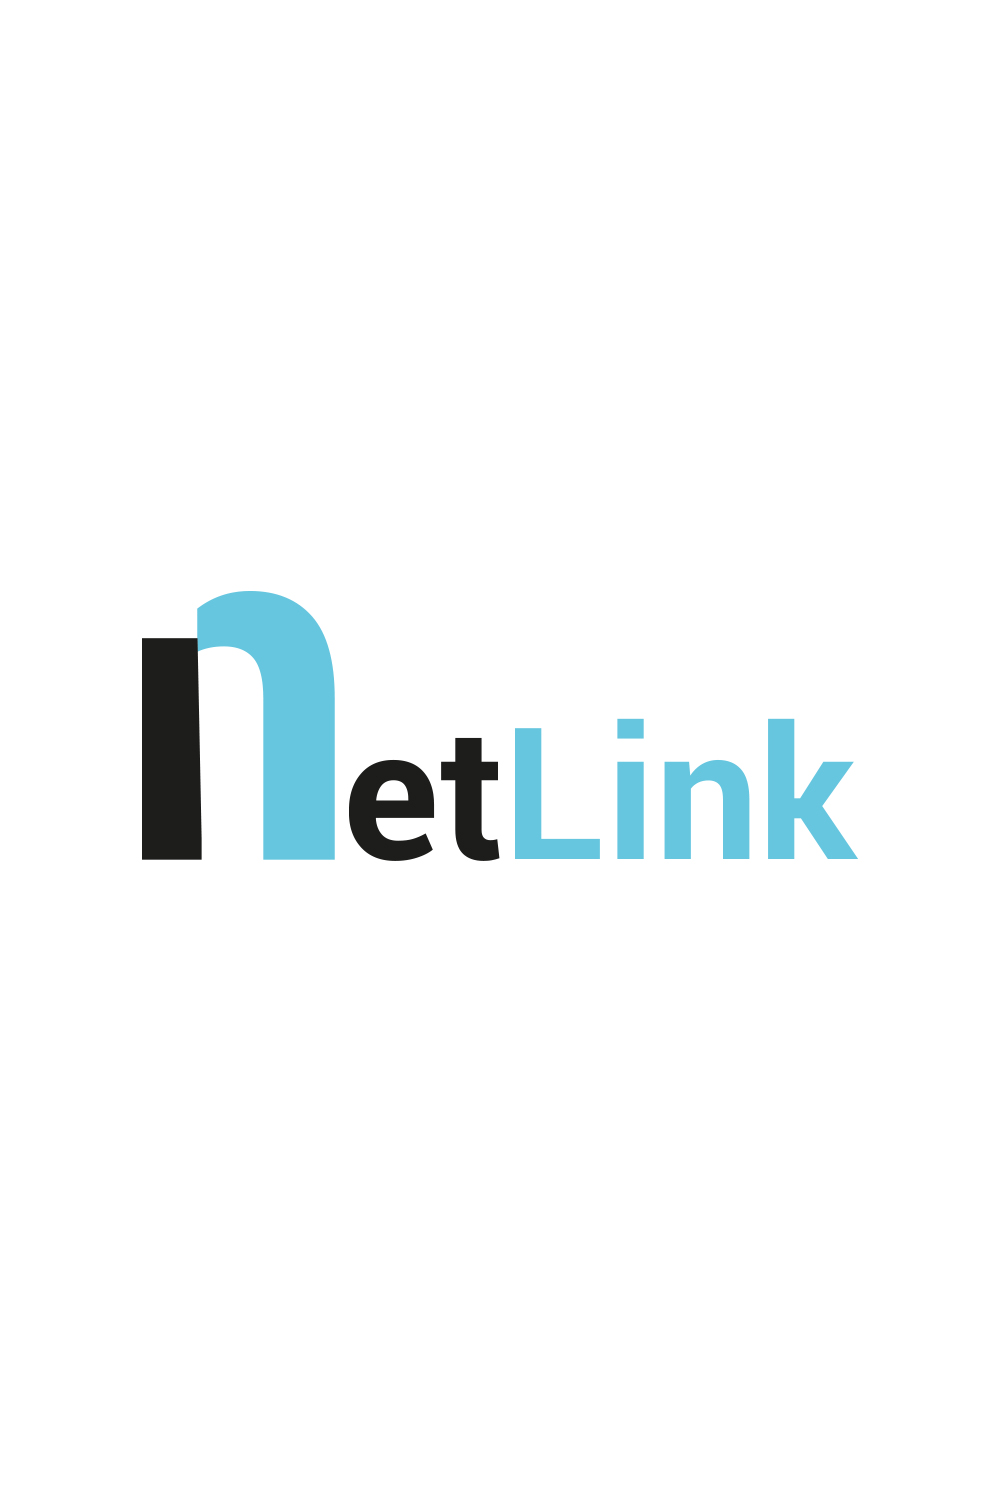 Letter N logo design ( txt is easily editable ) pinterest preview image.